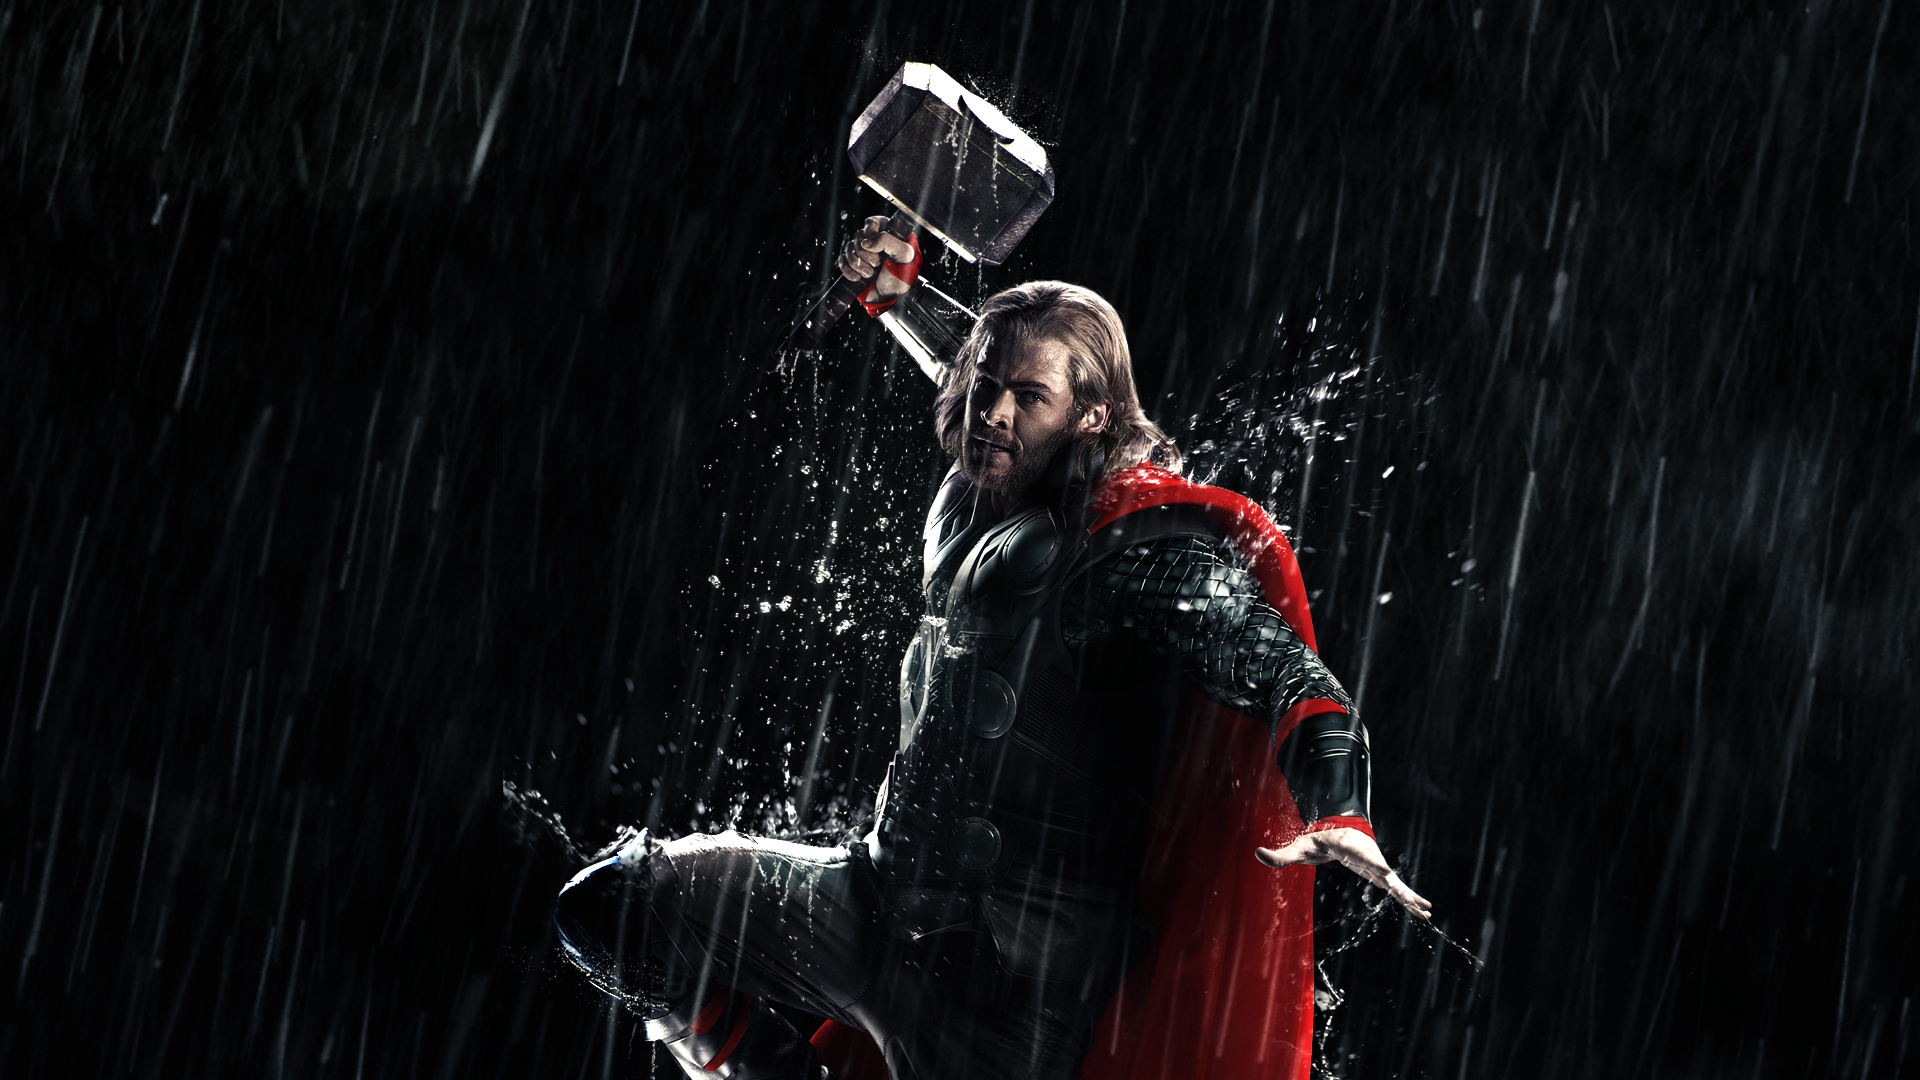 Hoeveel weegt de hamer van Thor?